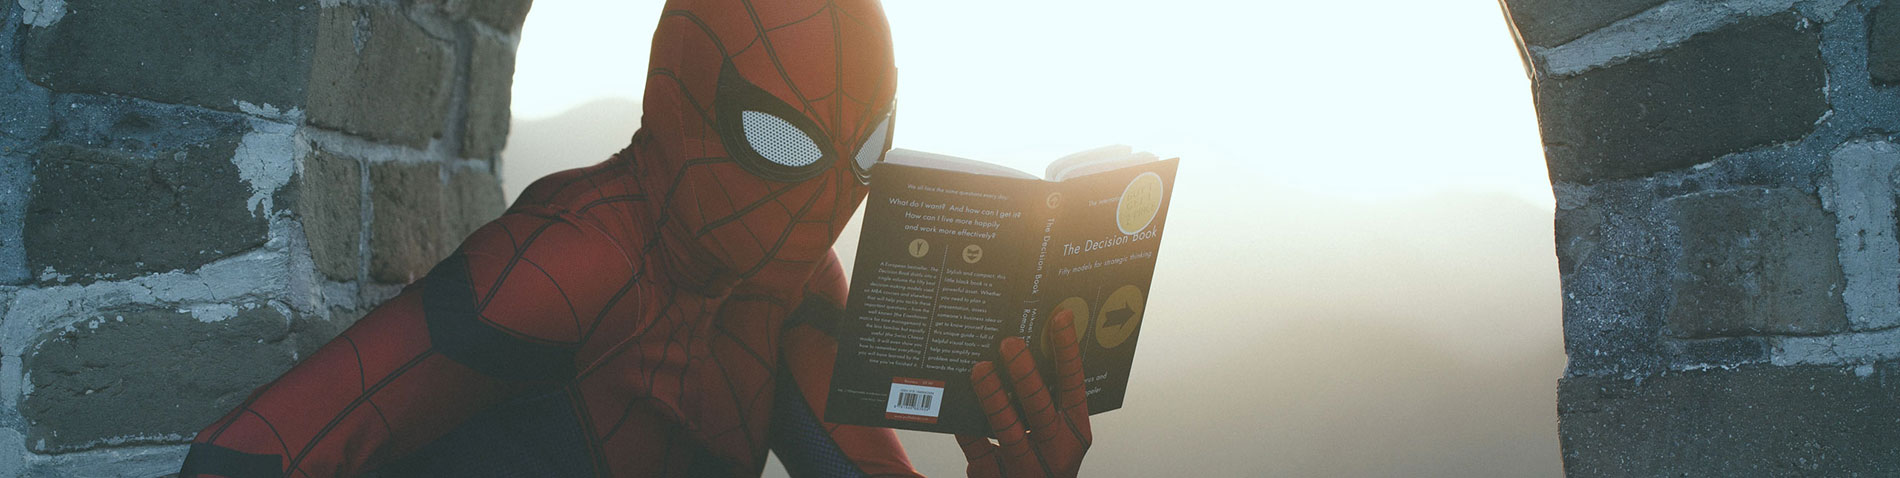 spider-man reading